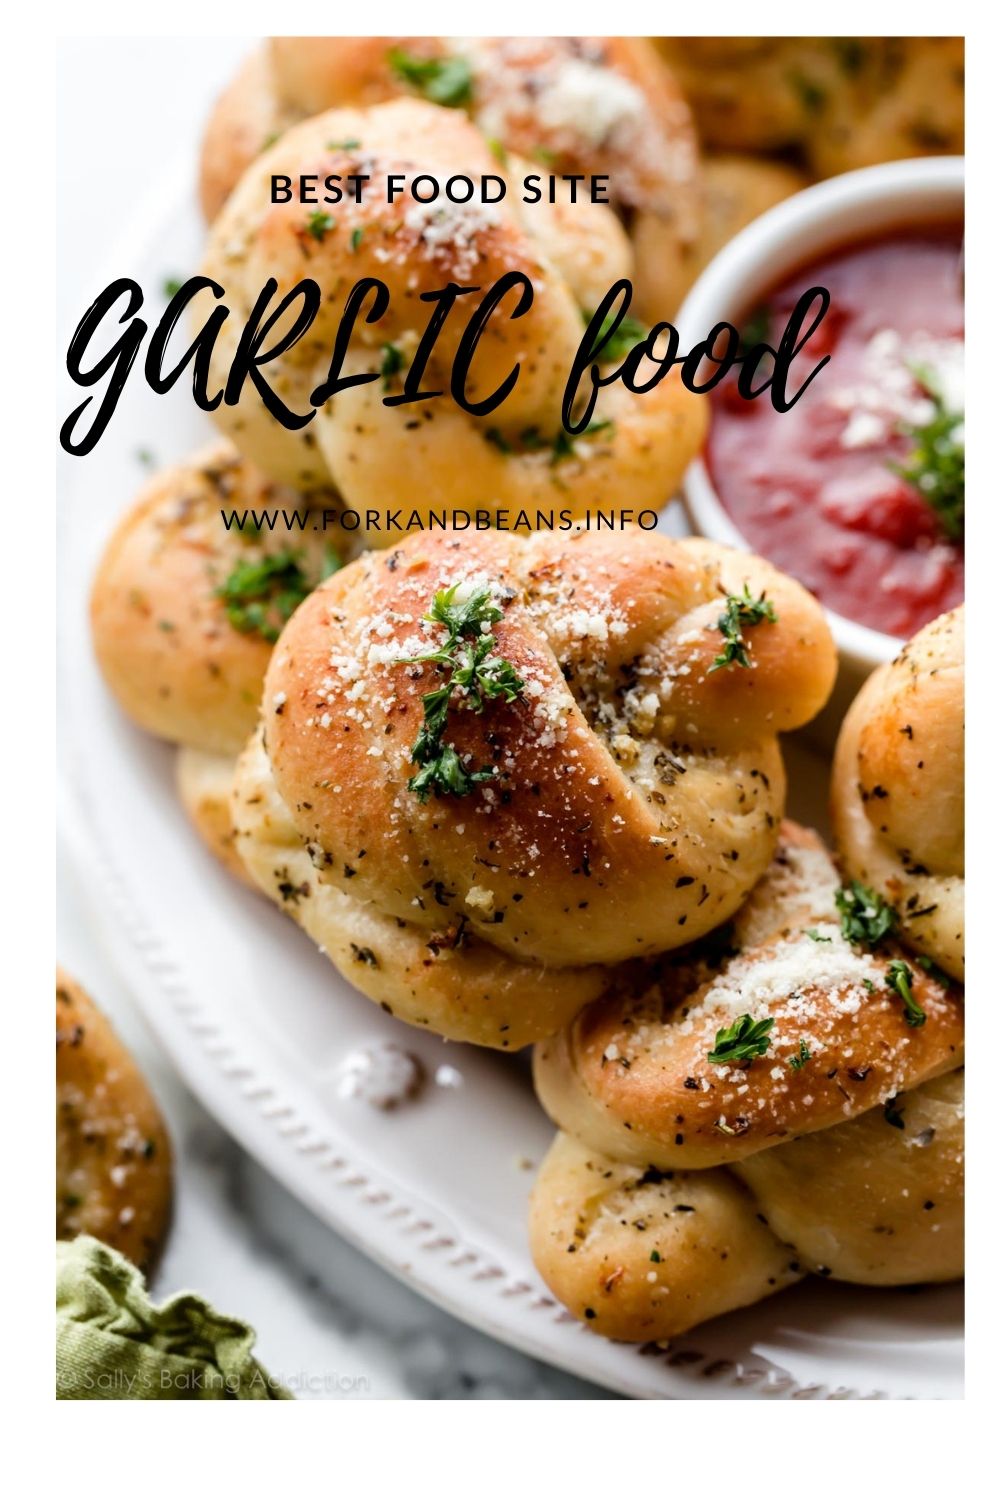 Garlic Knots